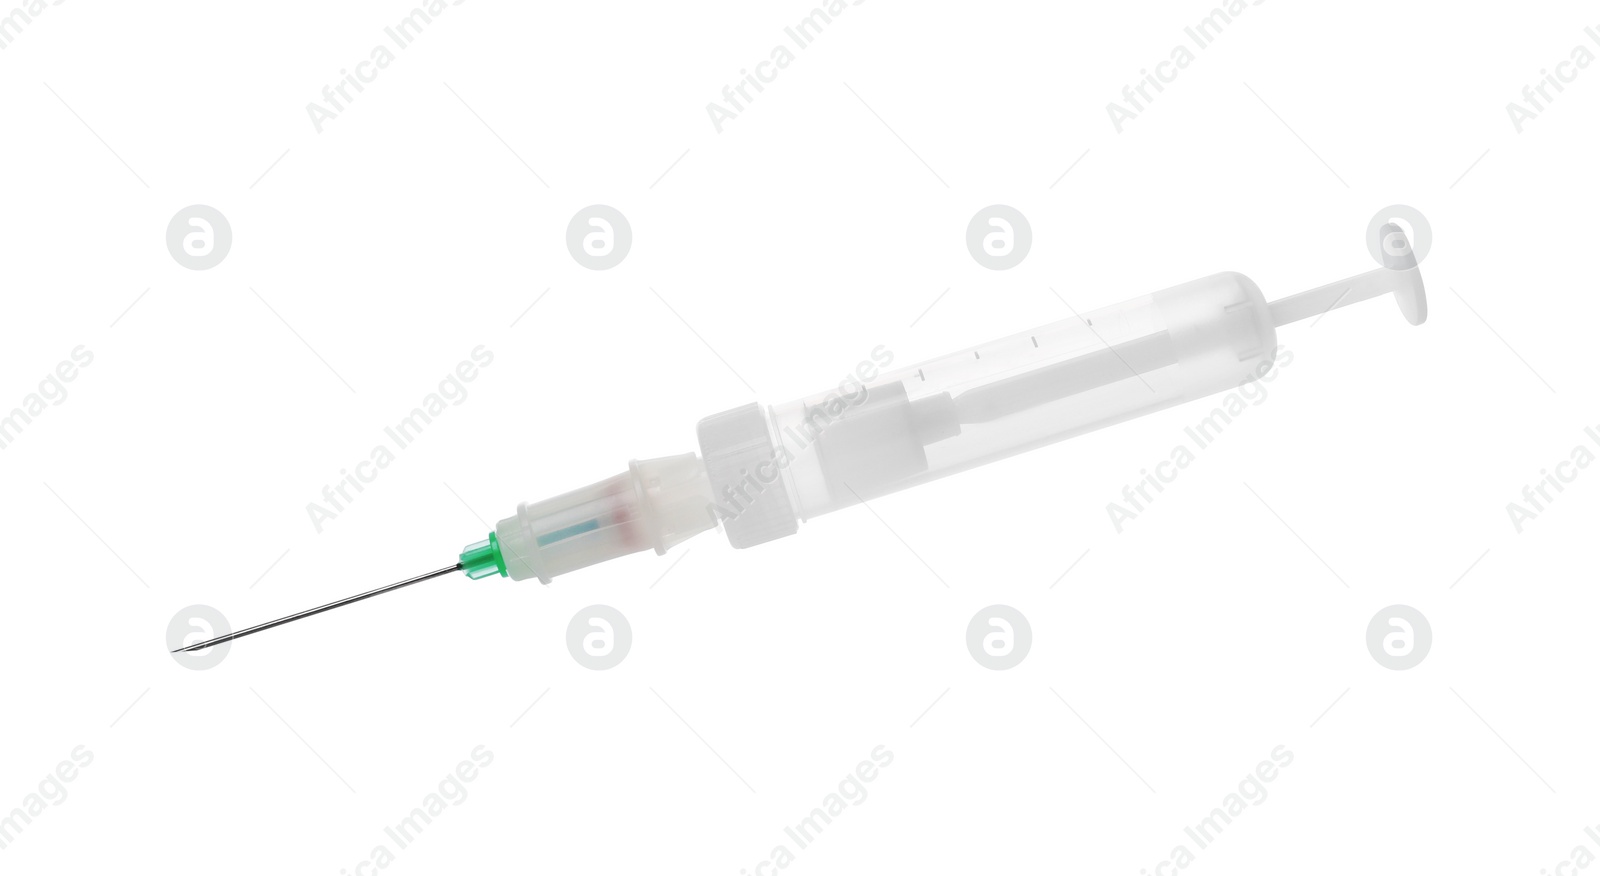 Photo of Disposable syringe with needle isolated on white